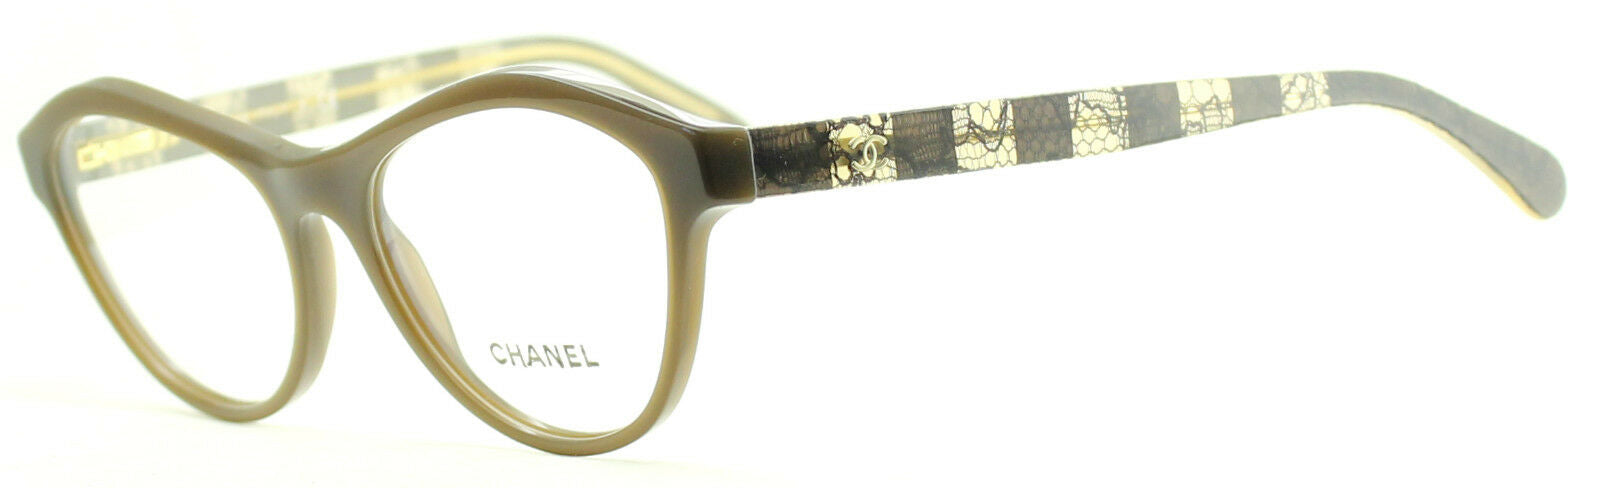 CHANEL 3423 501 51mm Eyewear FRAMES Eyeglasses RX Optical Glasses